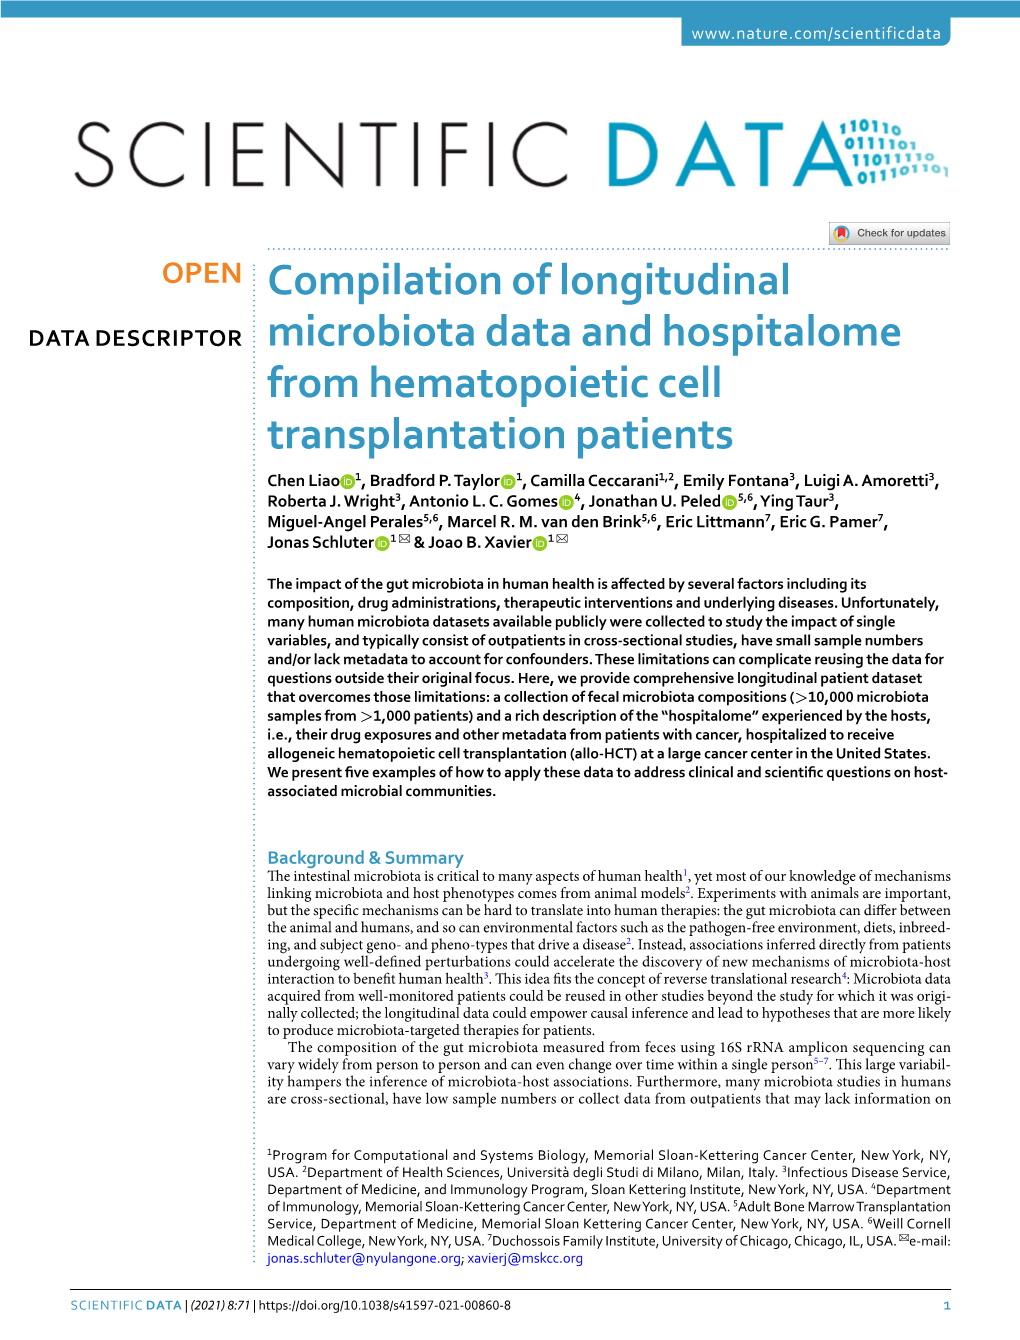 Compilation of Longitudinal Microbiota Data and Hospitalome from Hematopoietic Cell Transplantation Patients